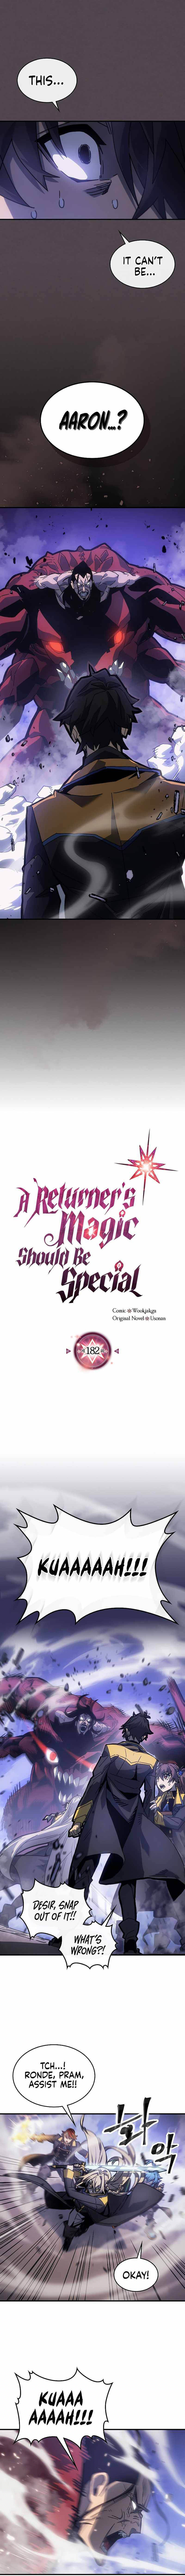 A Returners Magic Should Be Special 182 1